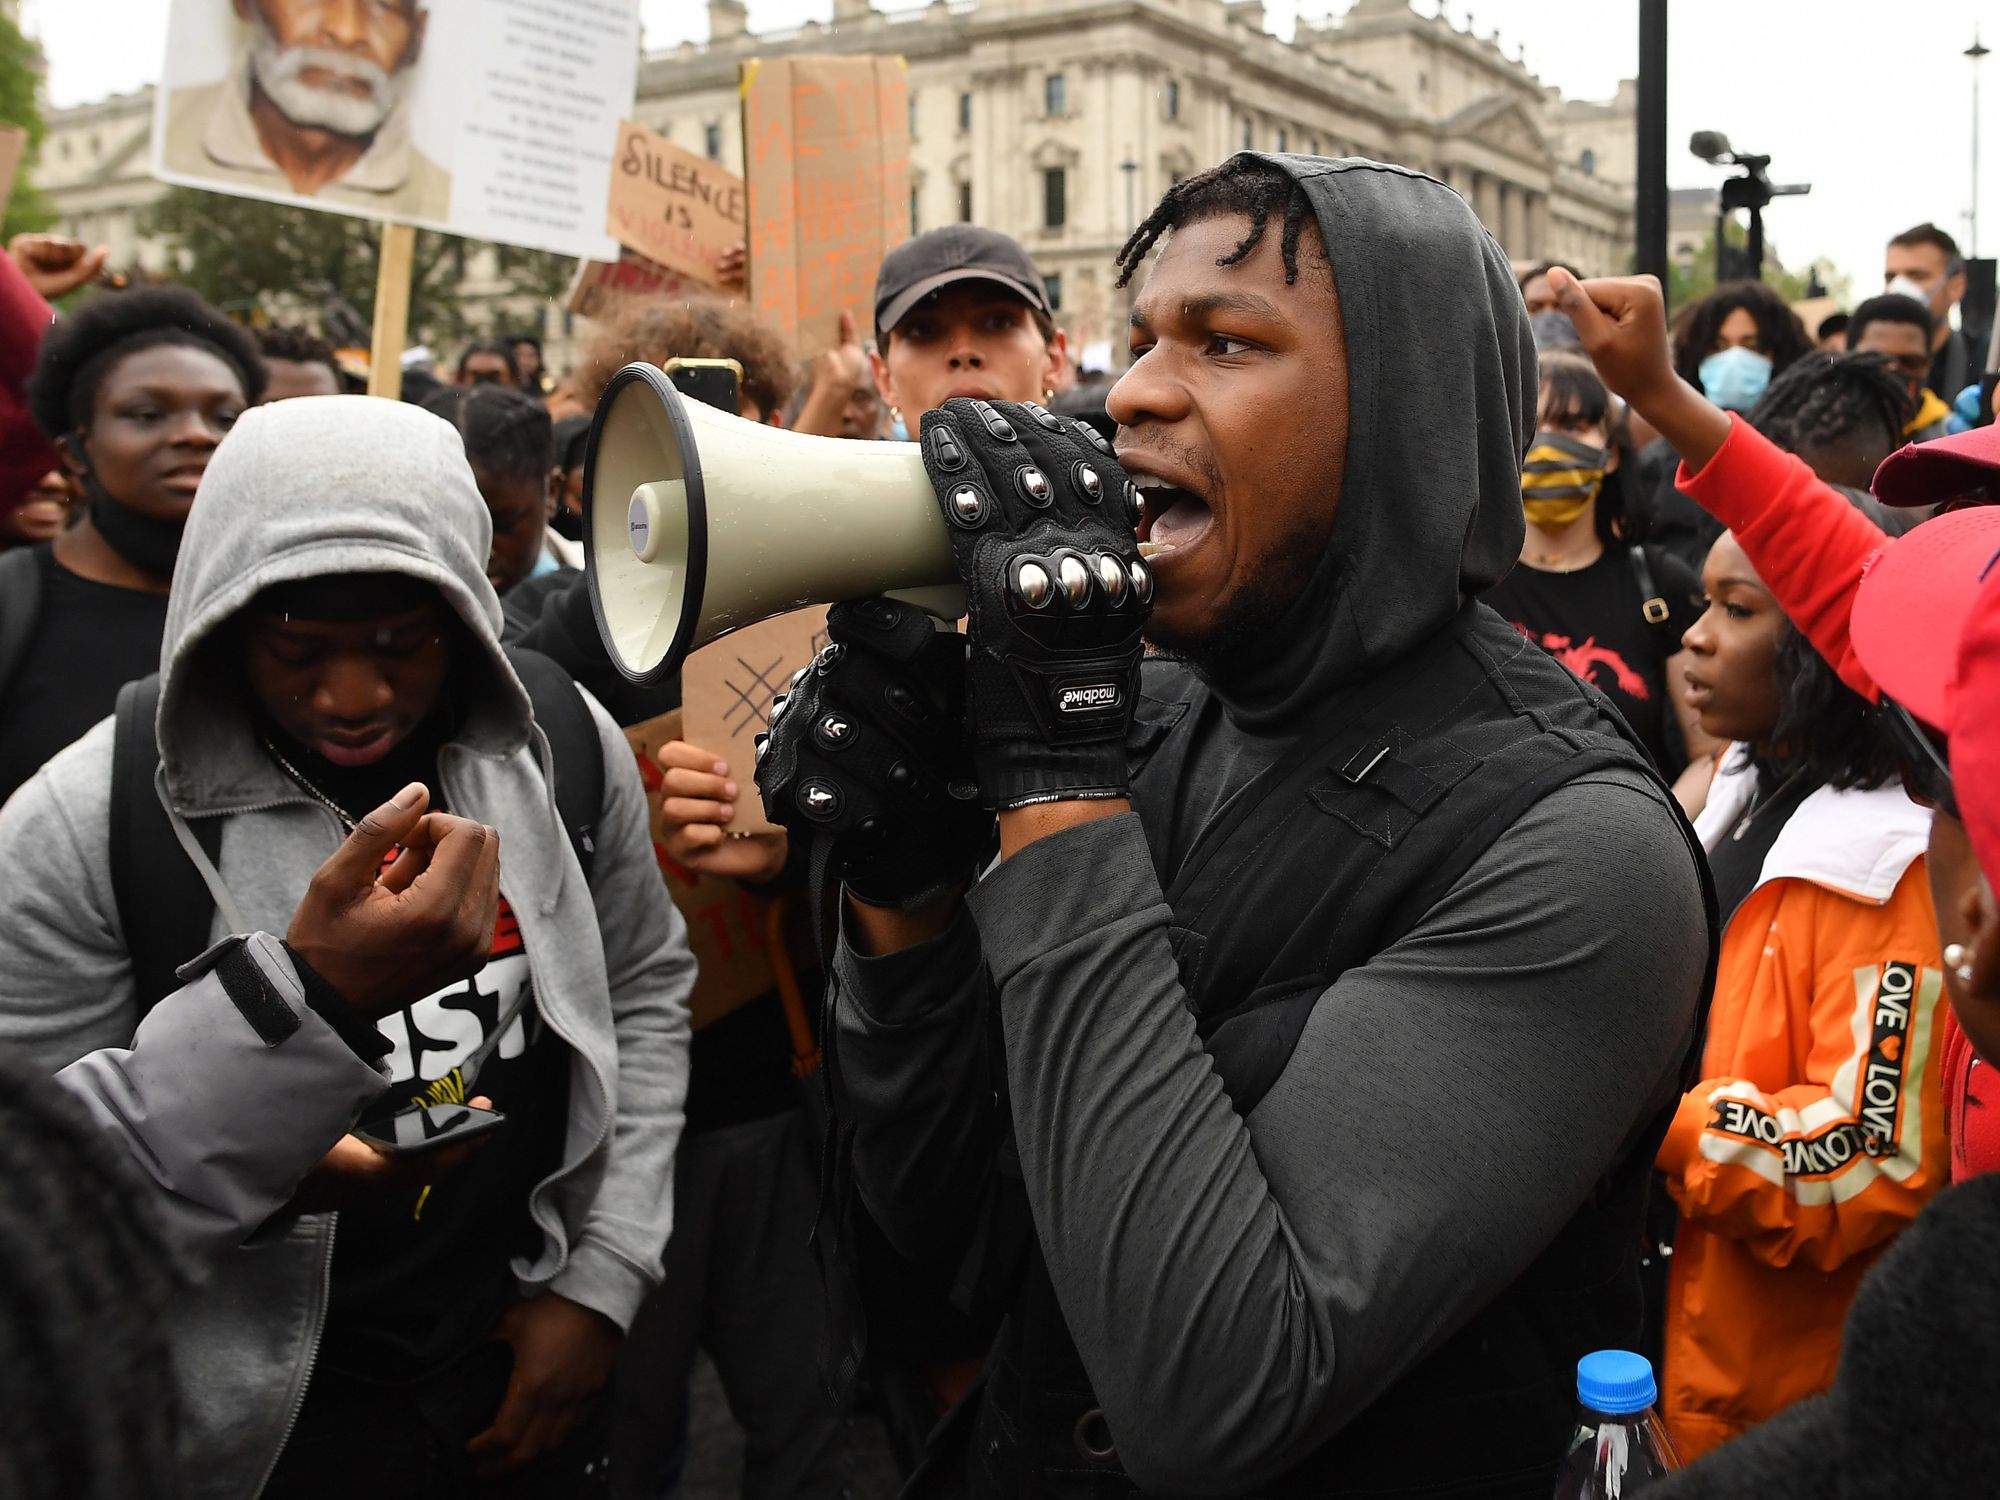 John Boyega at protest with megaphone.